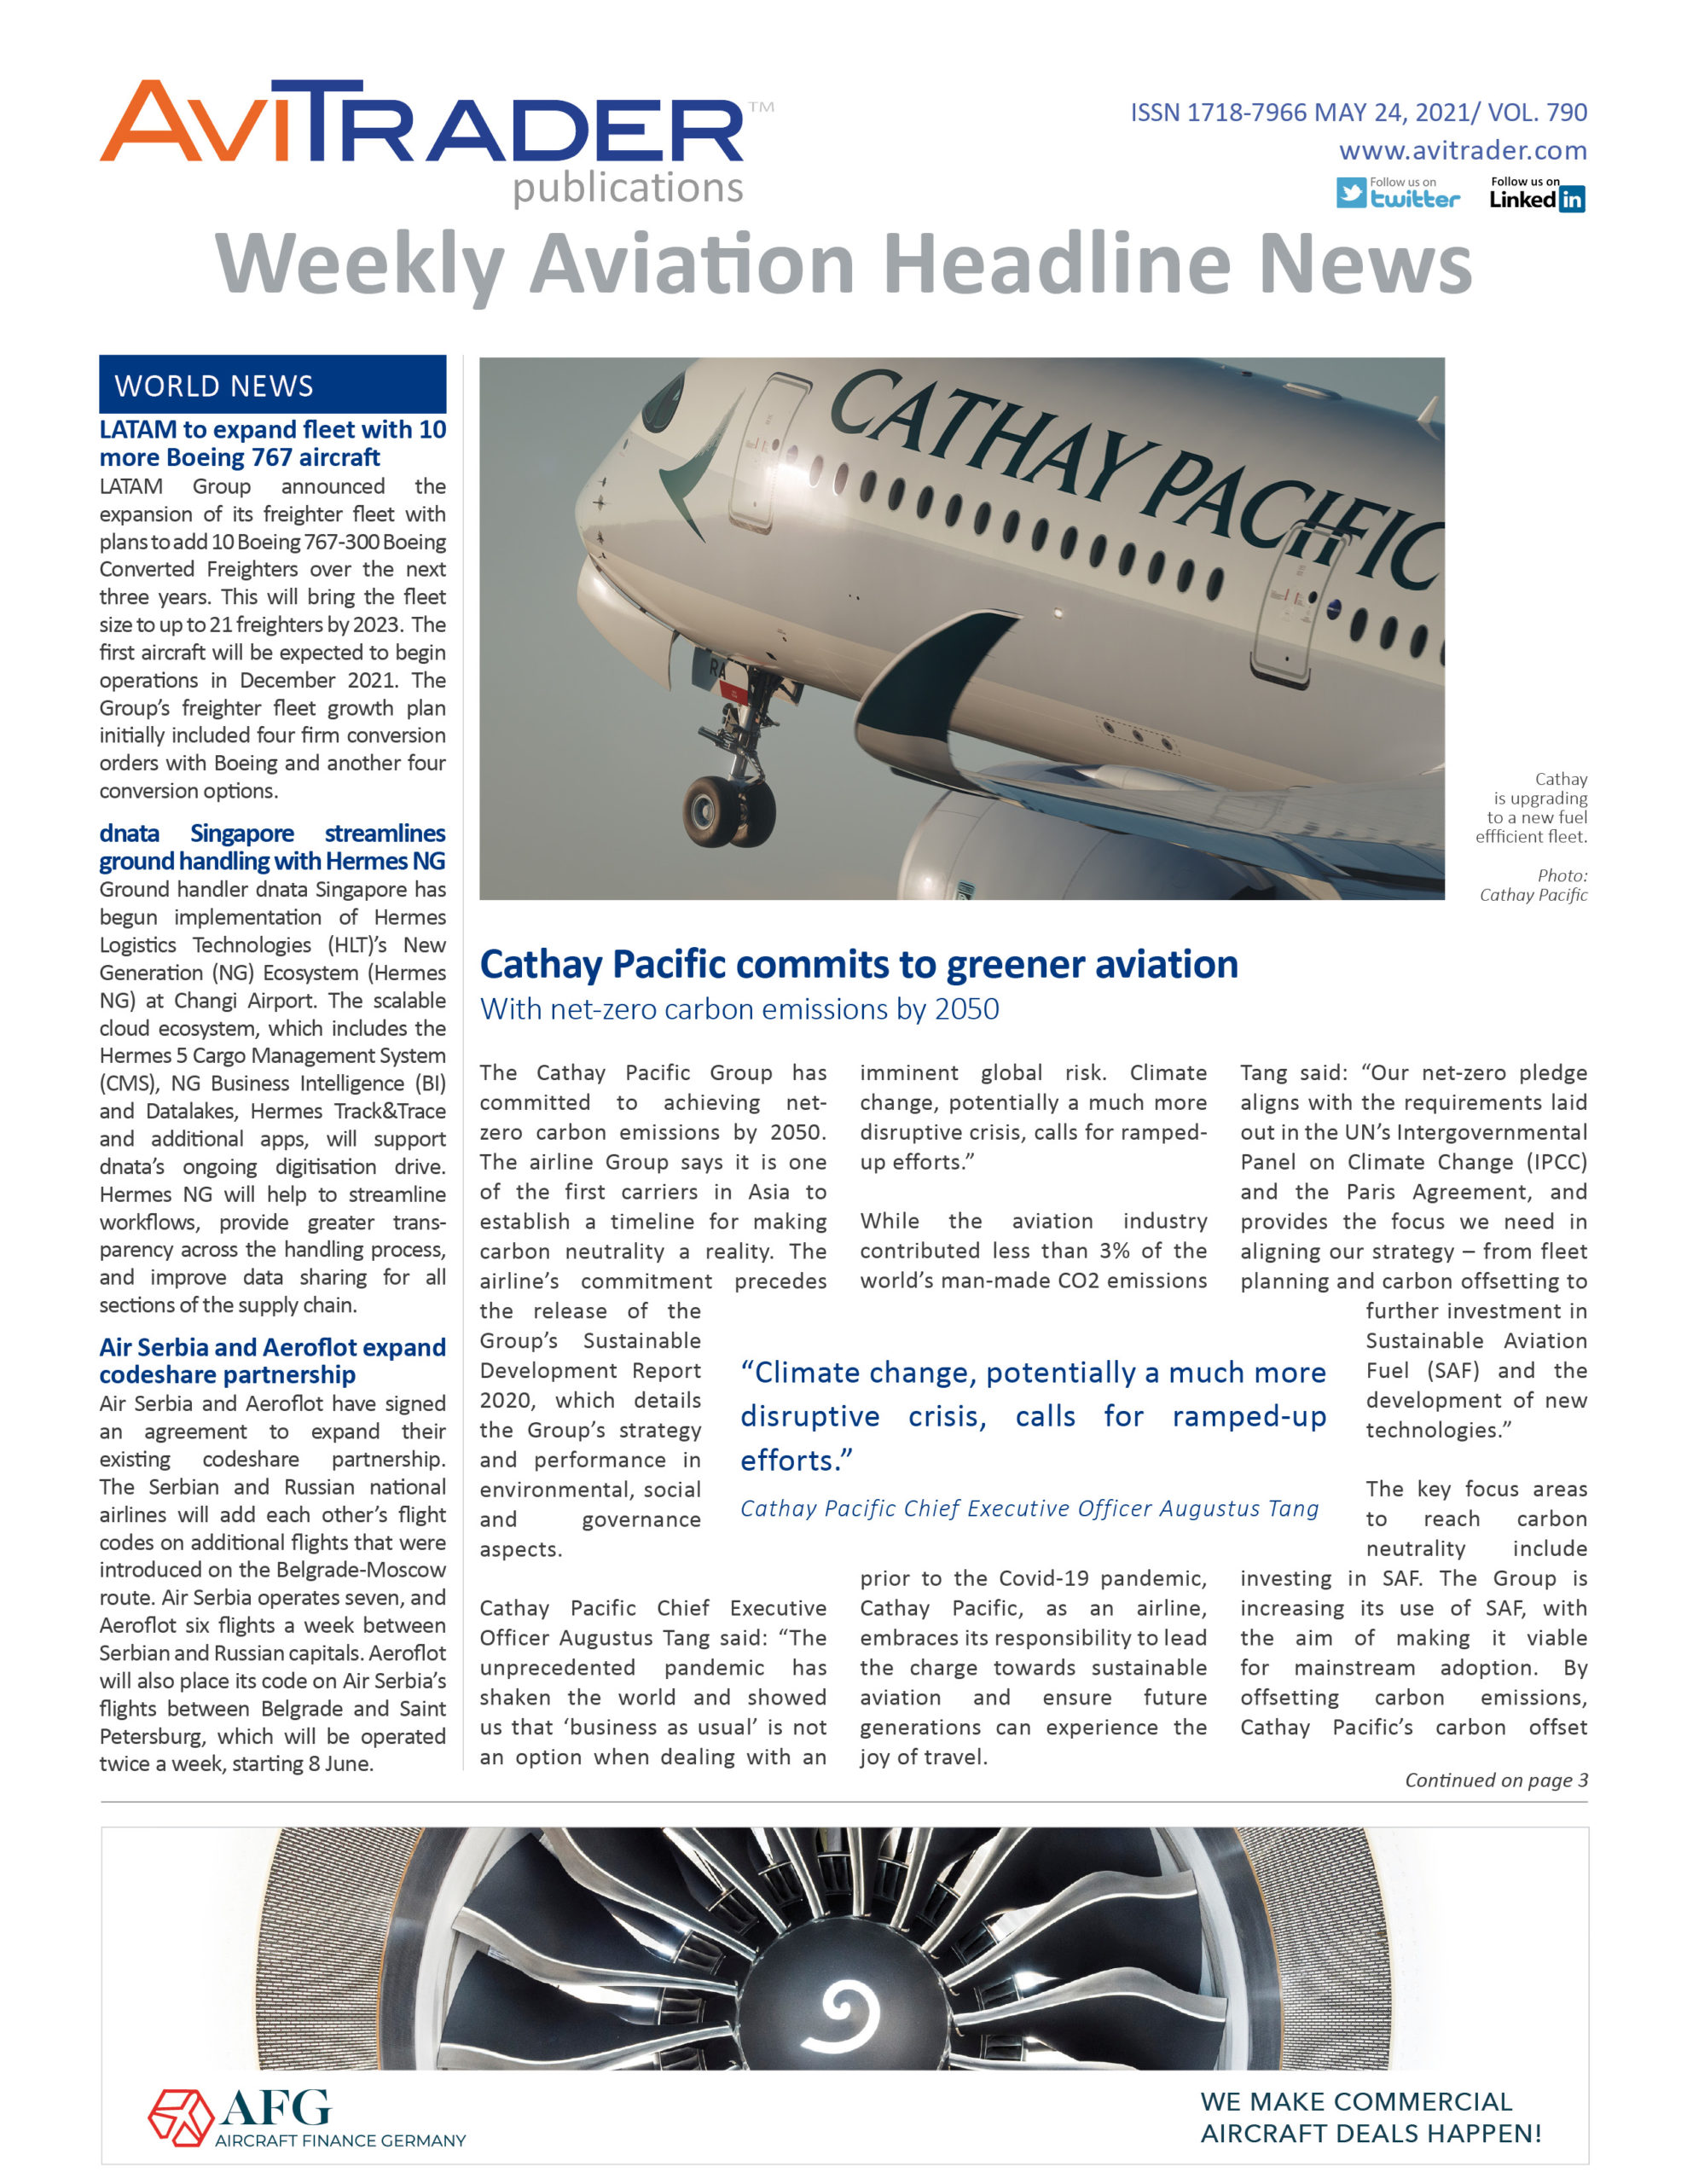 AviTrader_Weekly_Headline_News_Cover_2021-05-24